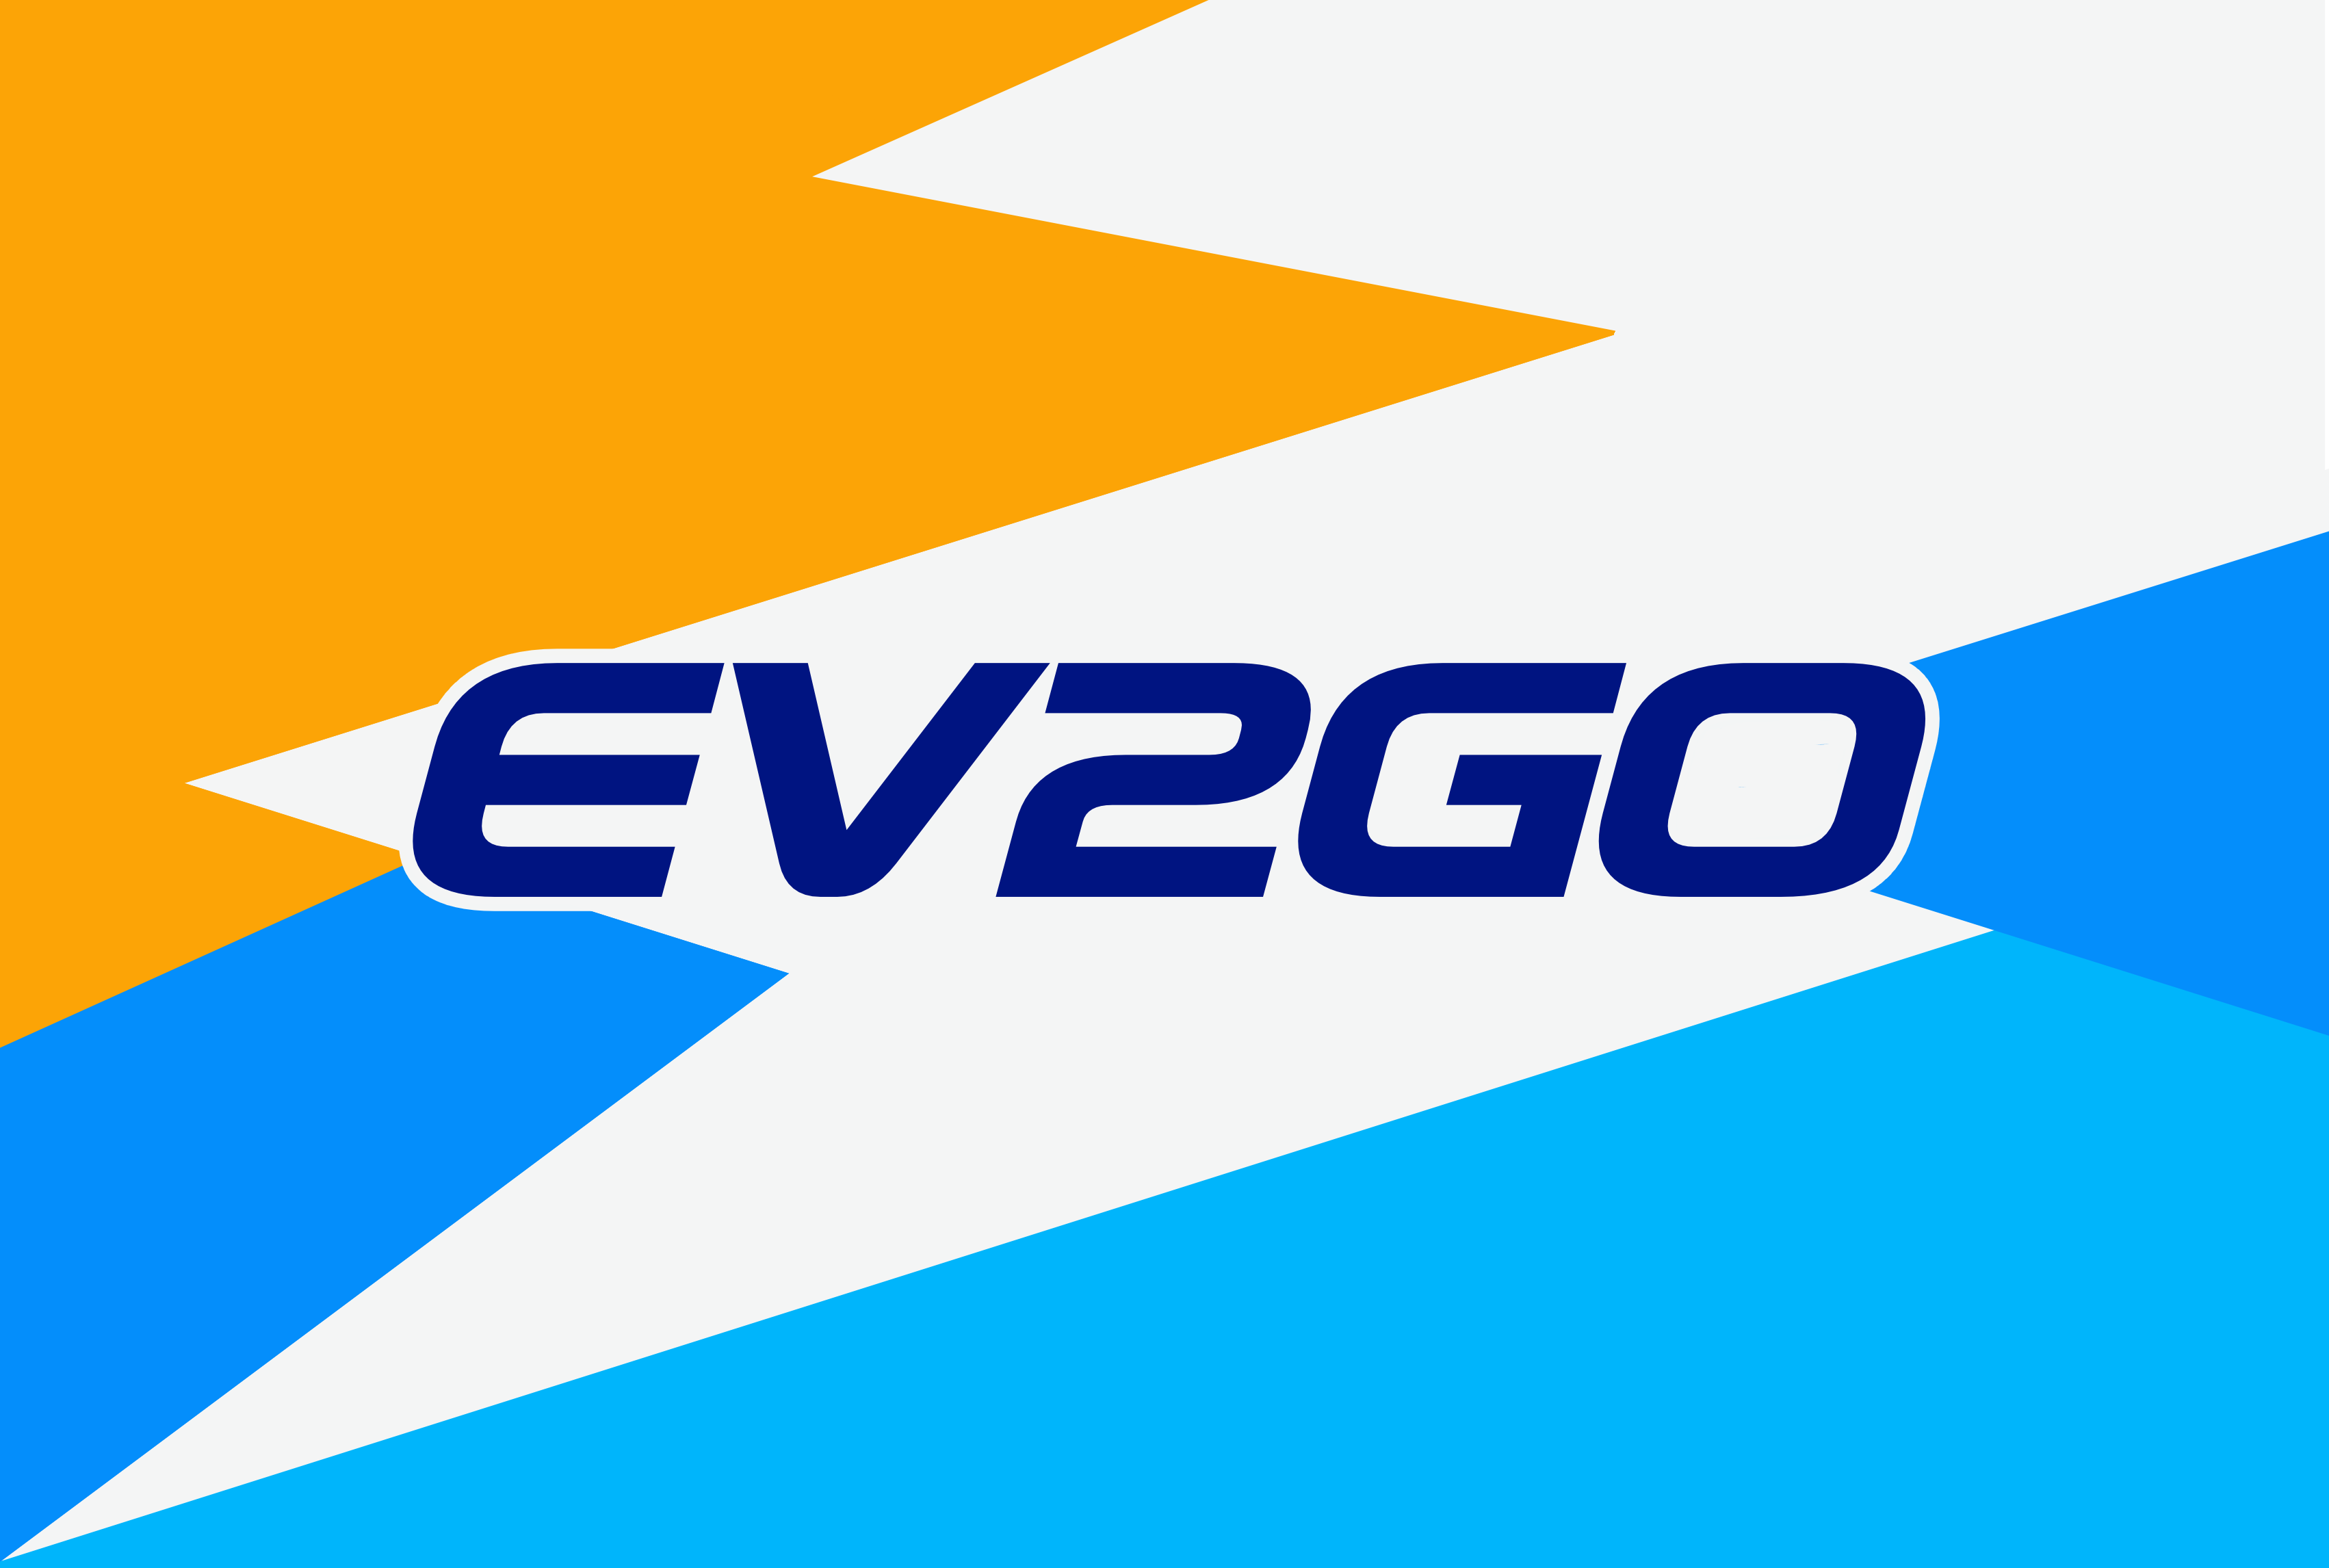 EV2GO-LOGO-CARD